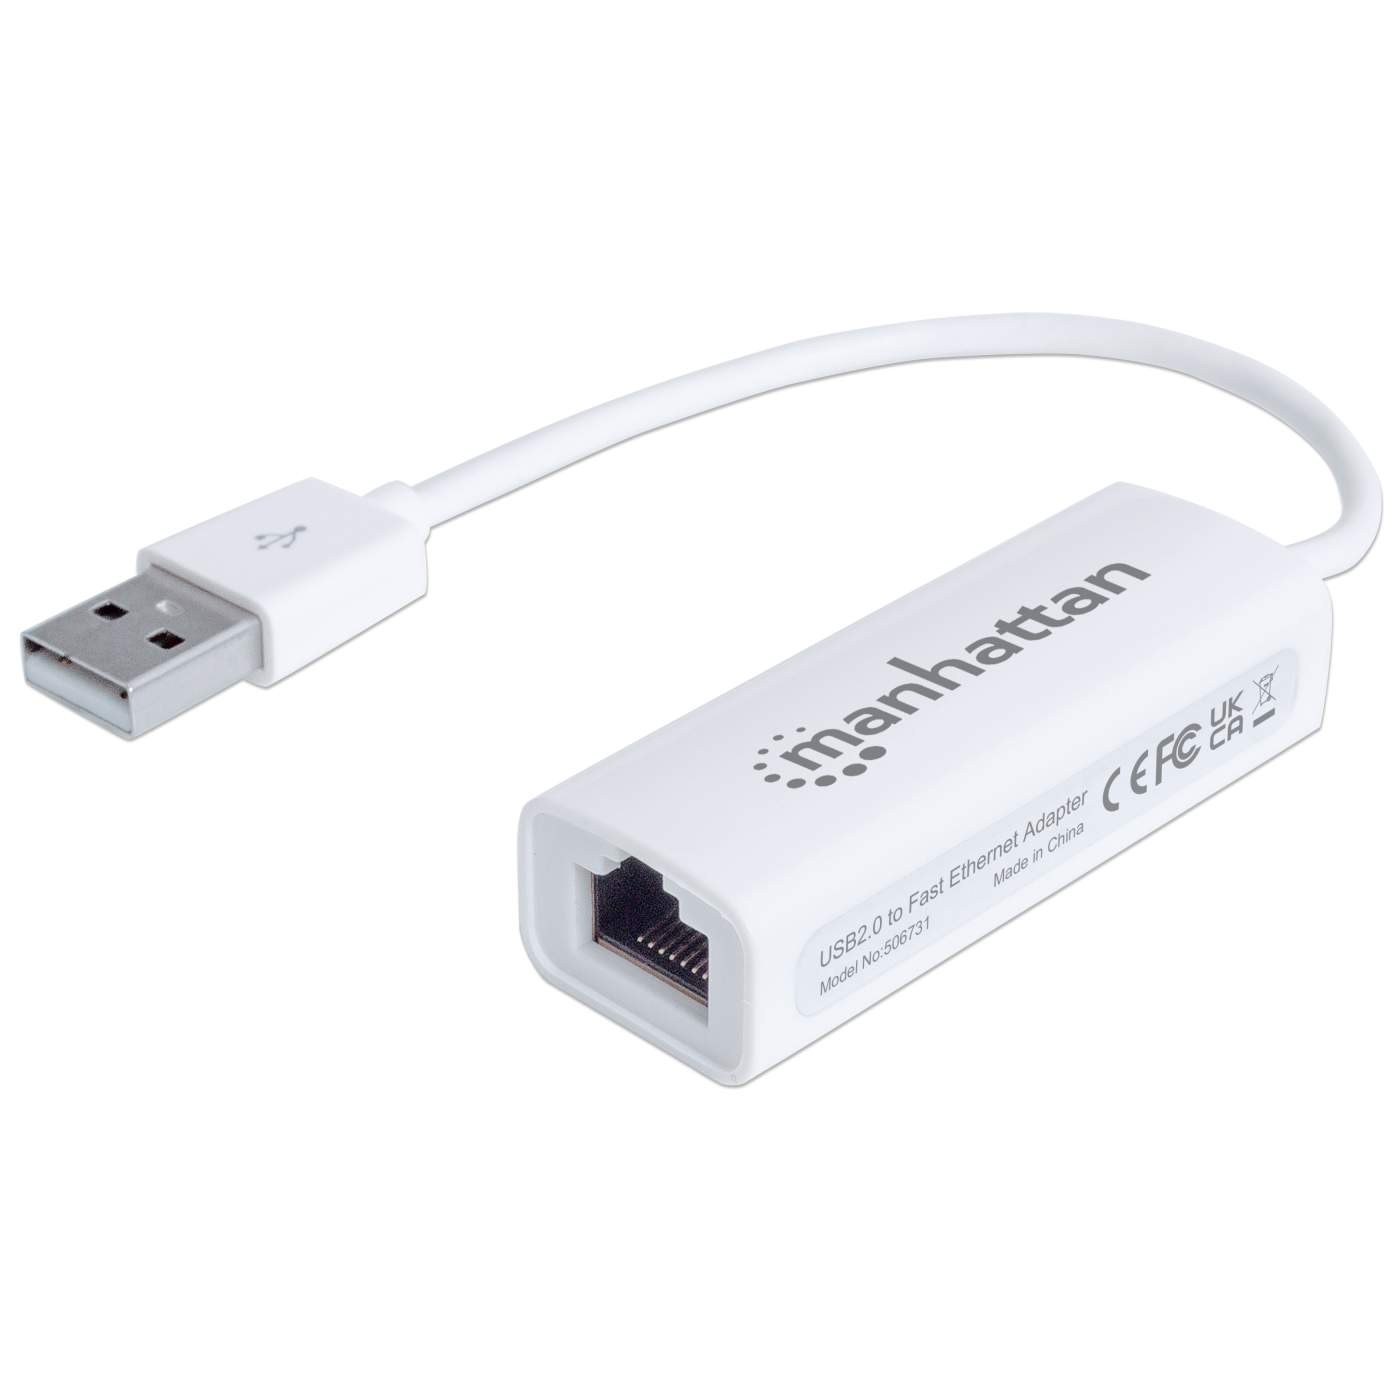 USB 2.0 Fast Ethernet Adapter Image 1